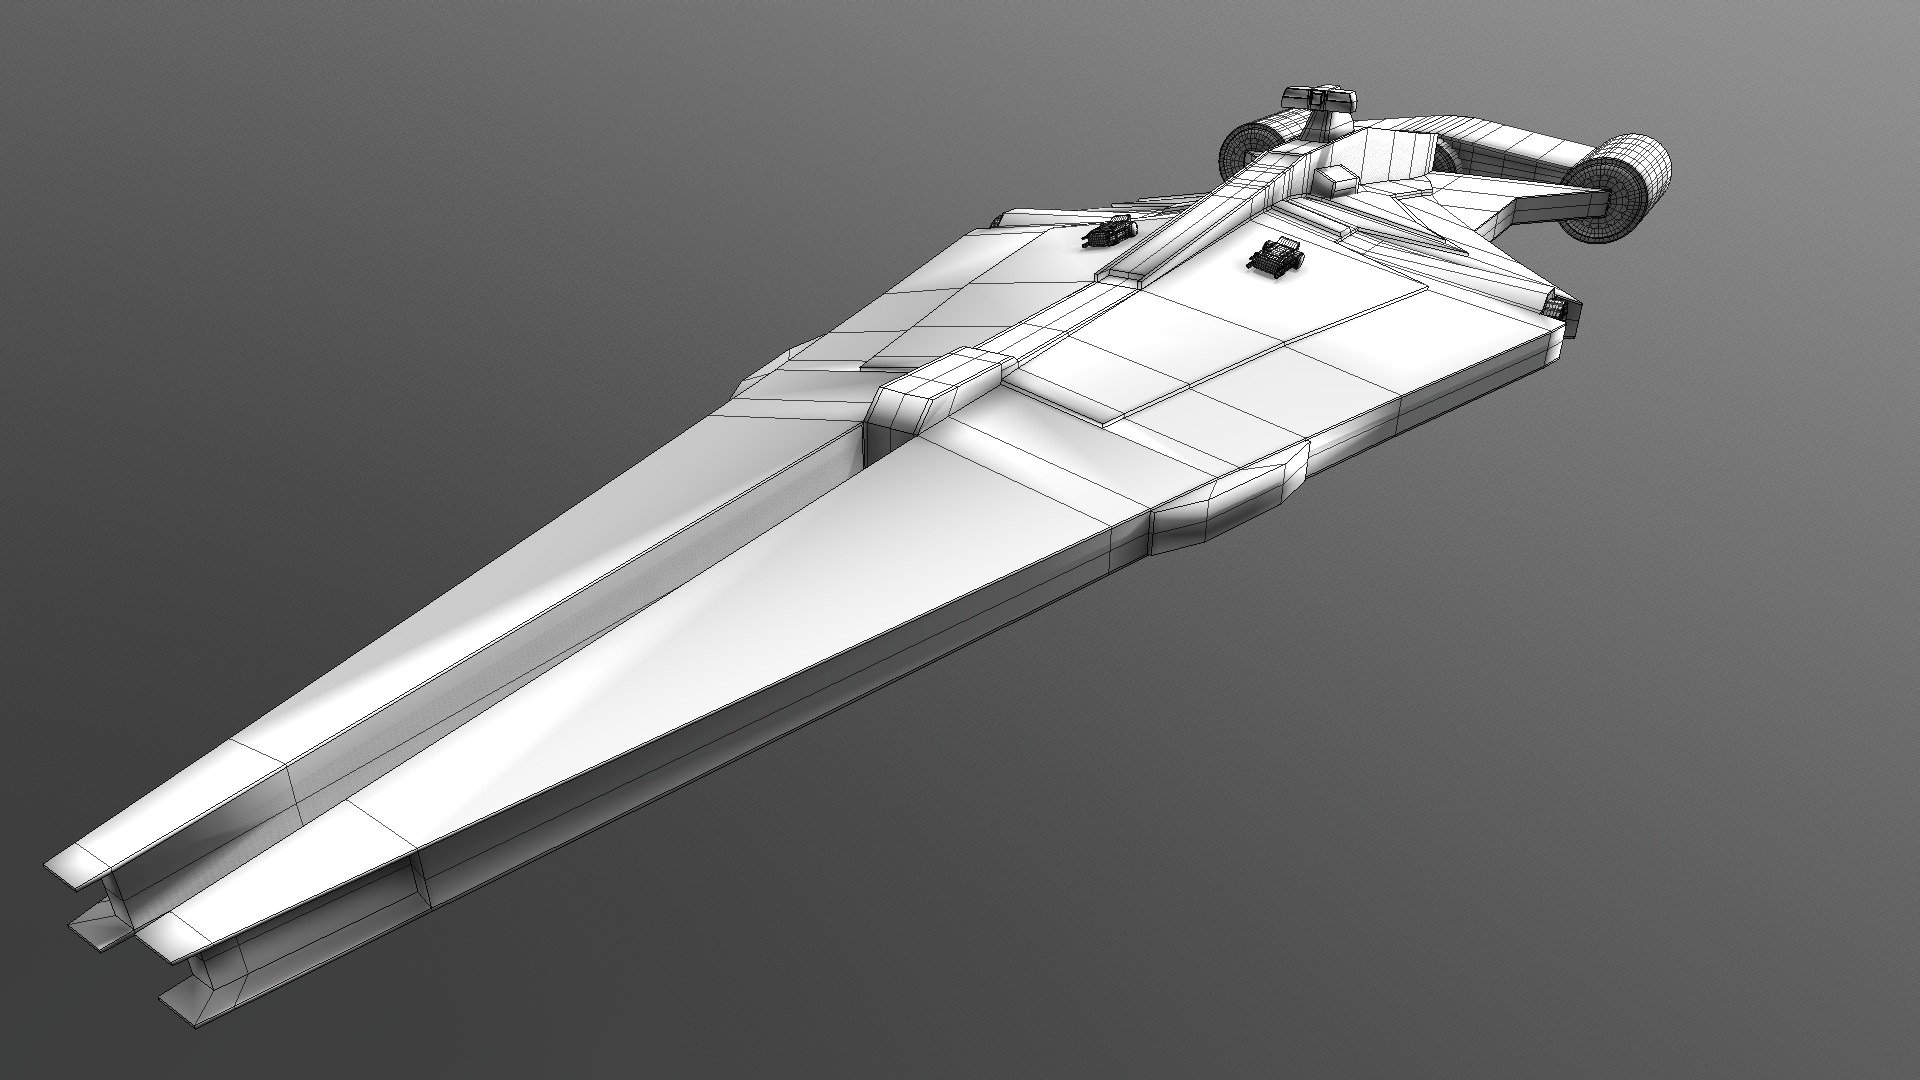 Star Wars Light Cruiser model by IronTrail [b6862e9]